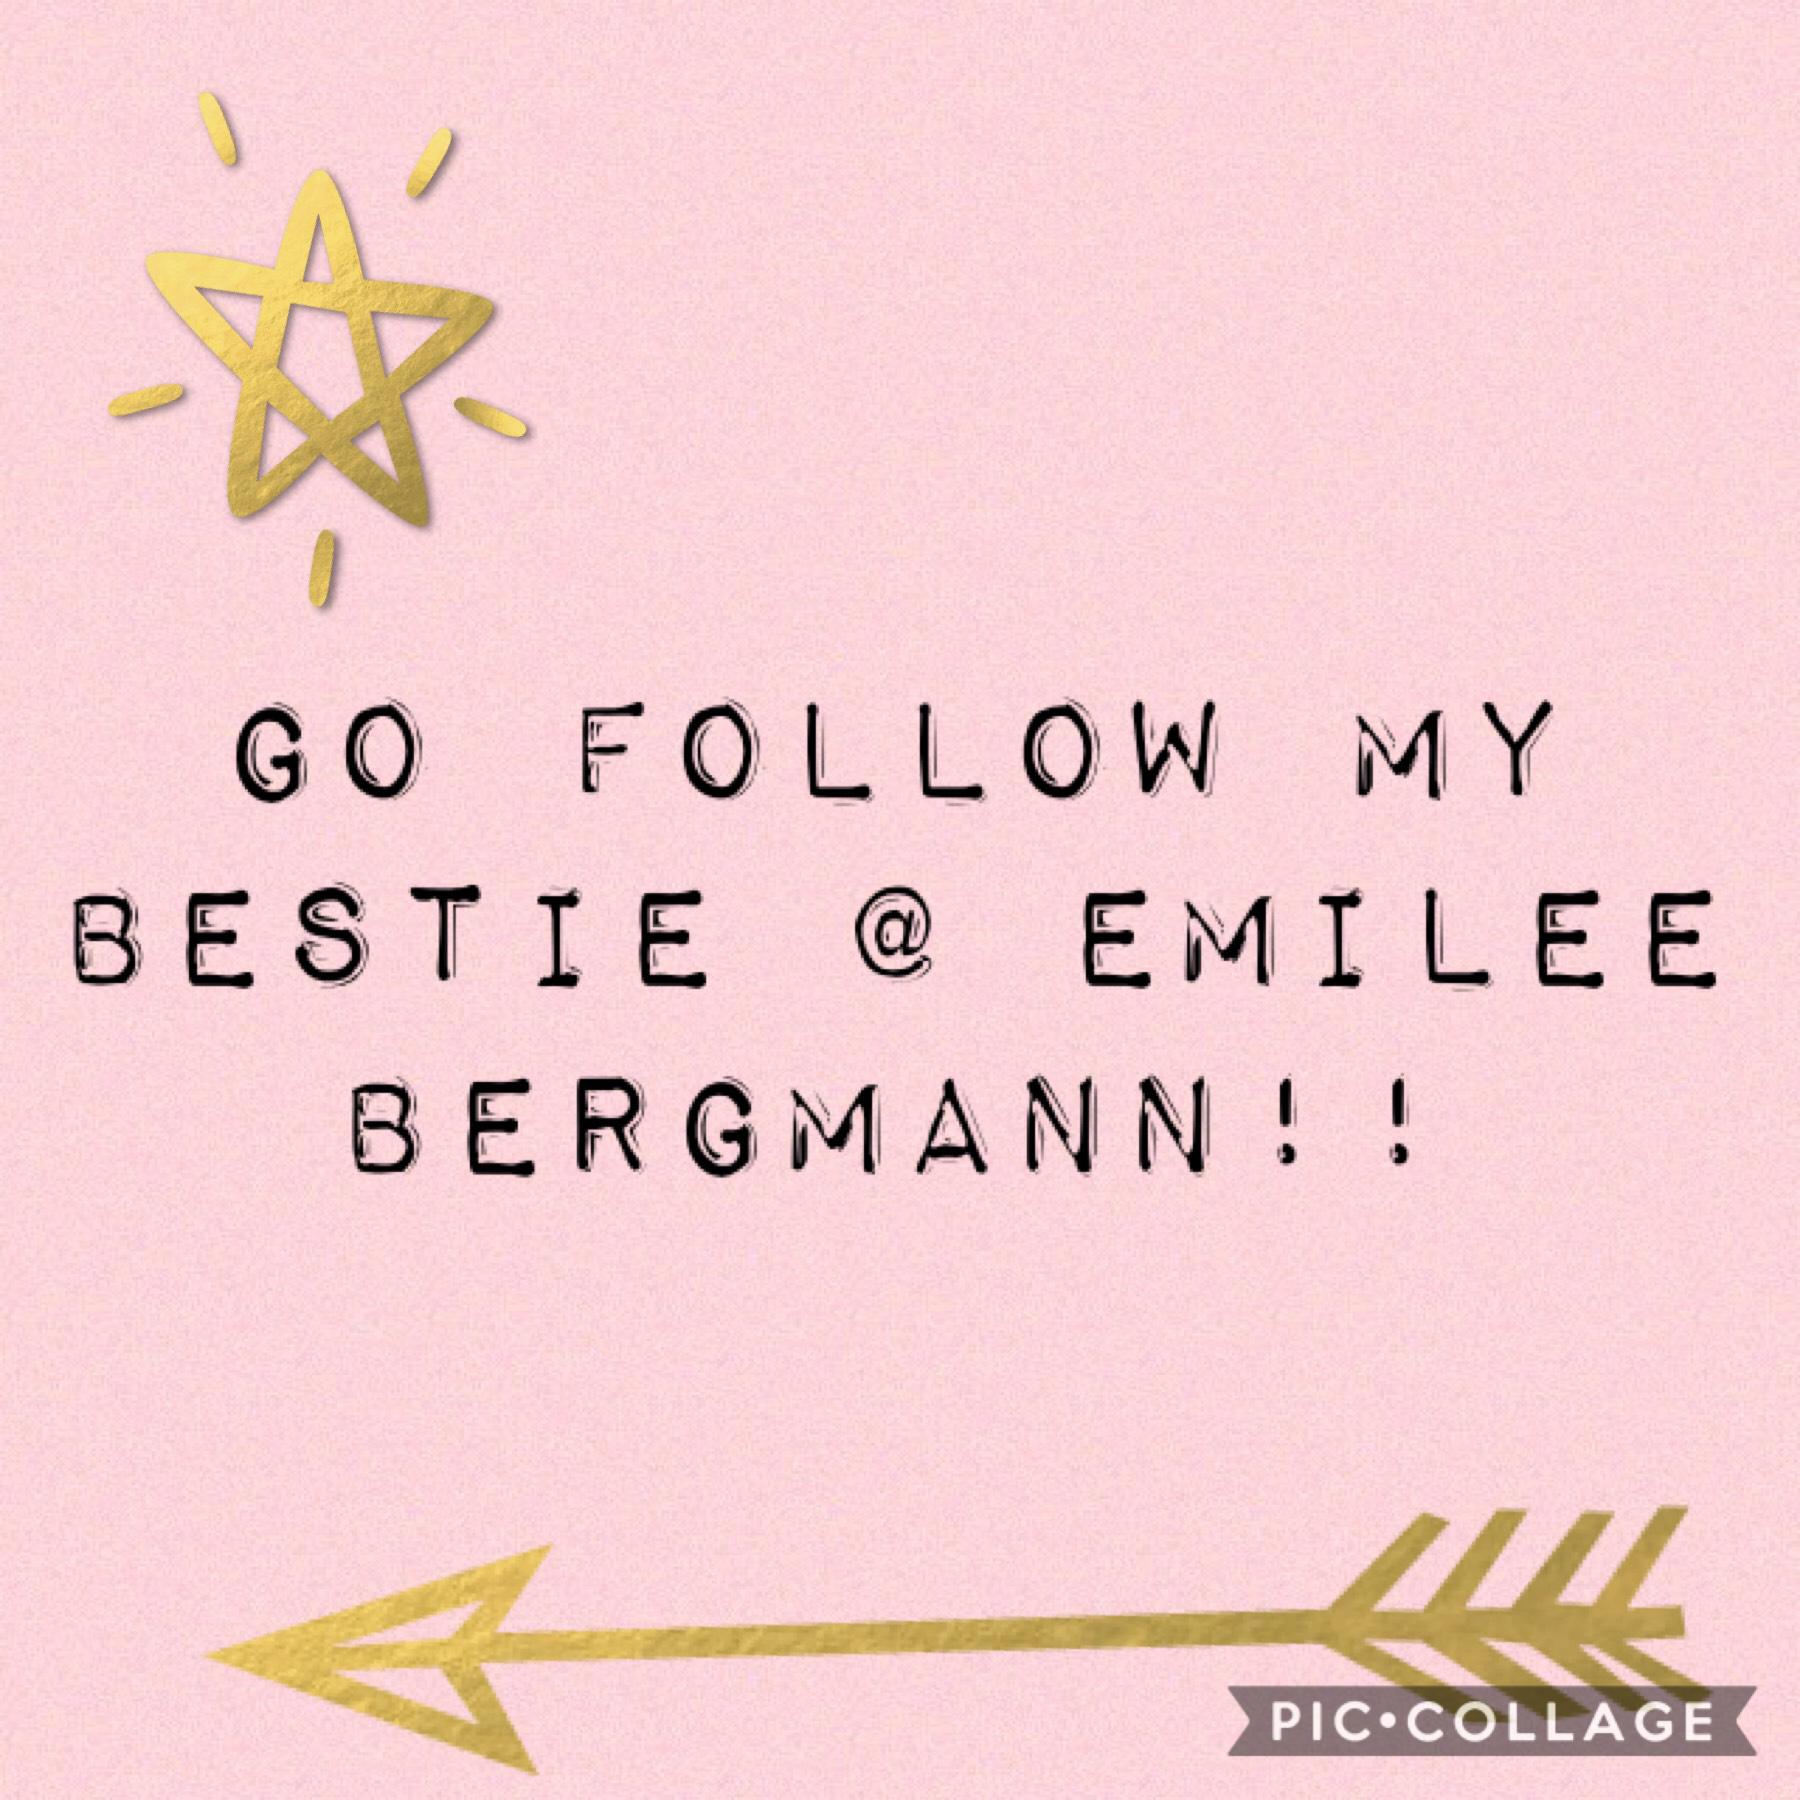 Go follow my bestie!!